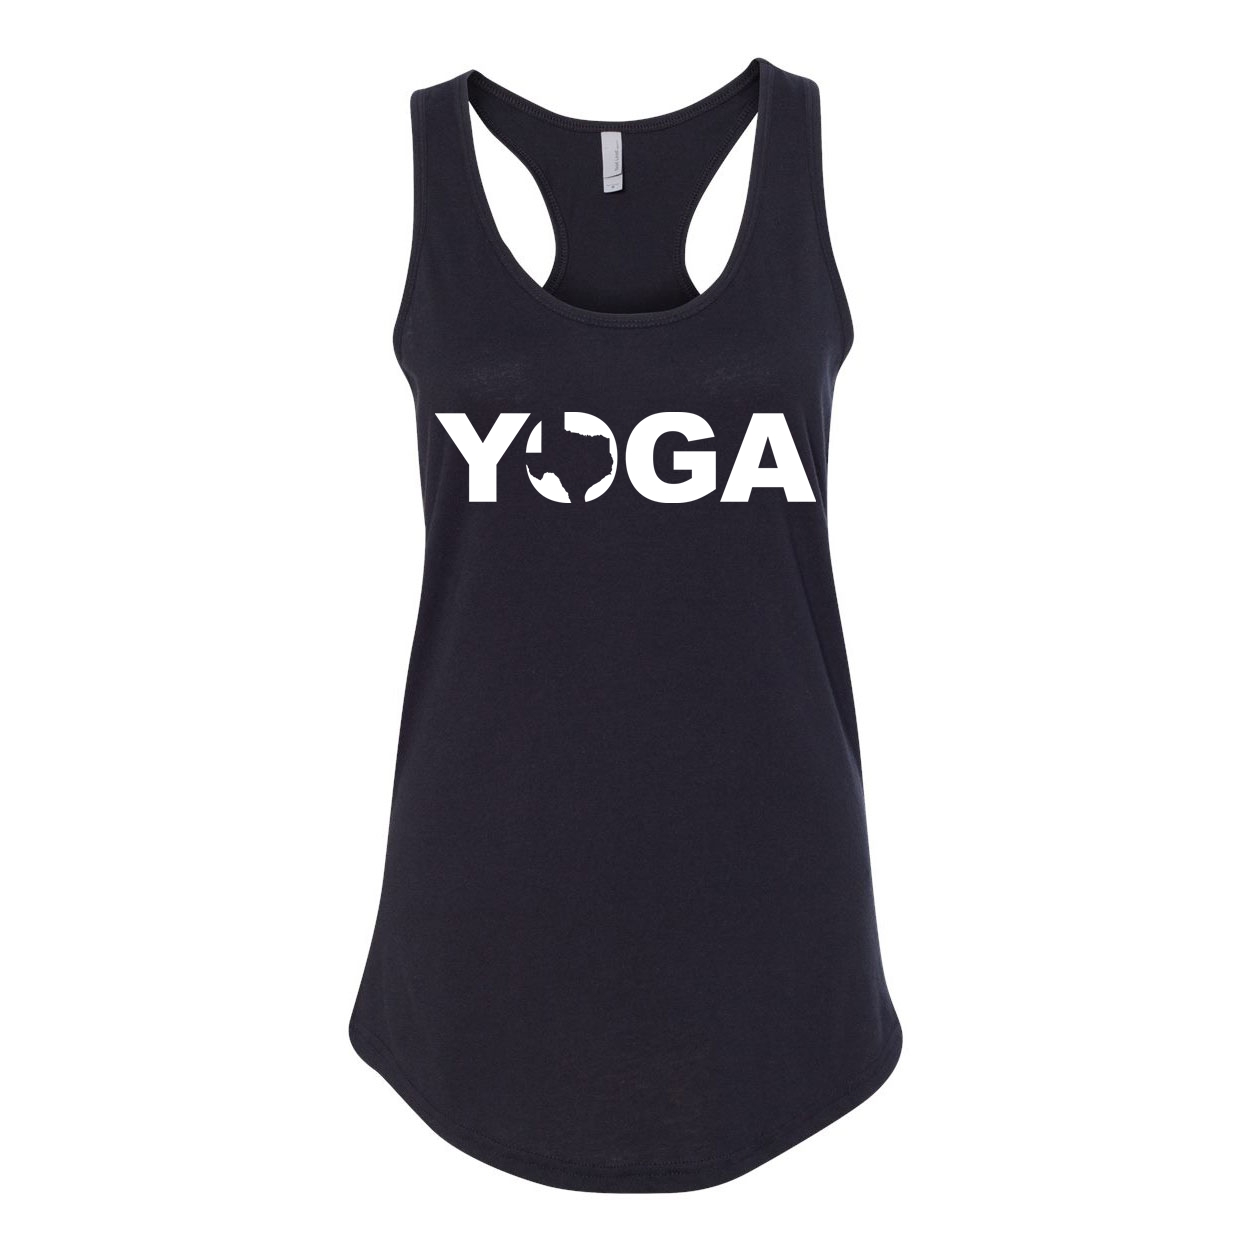 Yoga Texas Classic Women's Racerback Tank Top Black (White Logo)